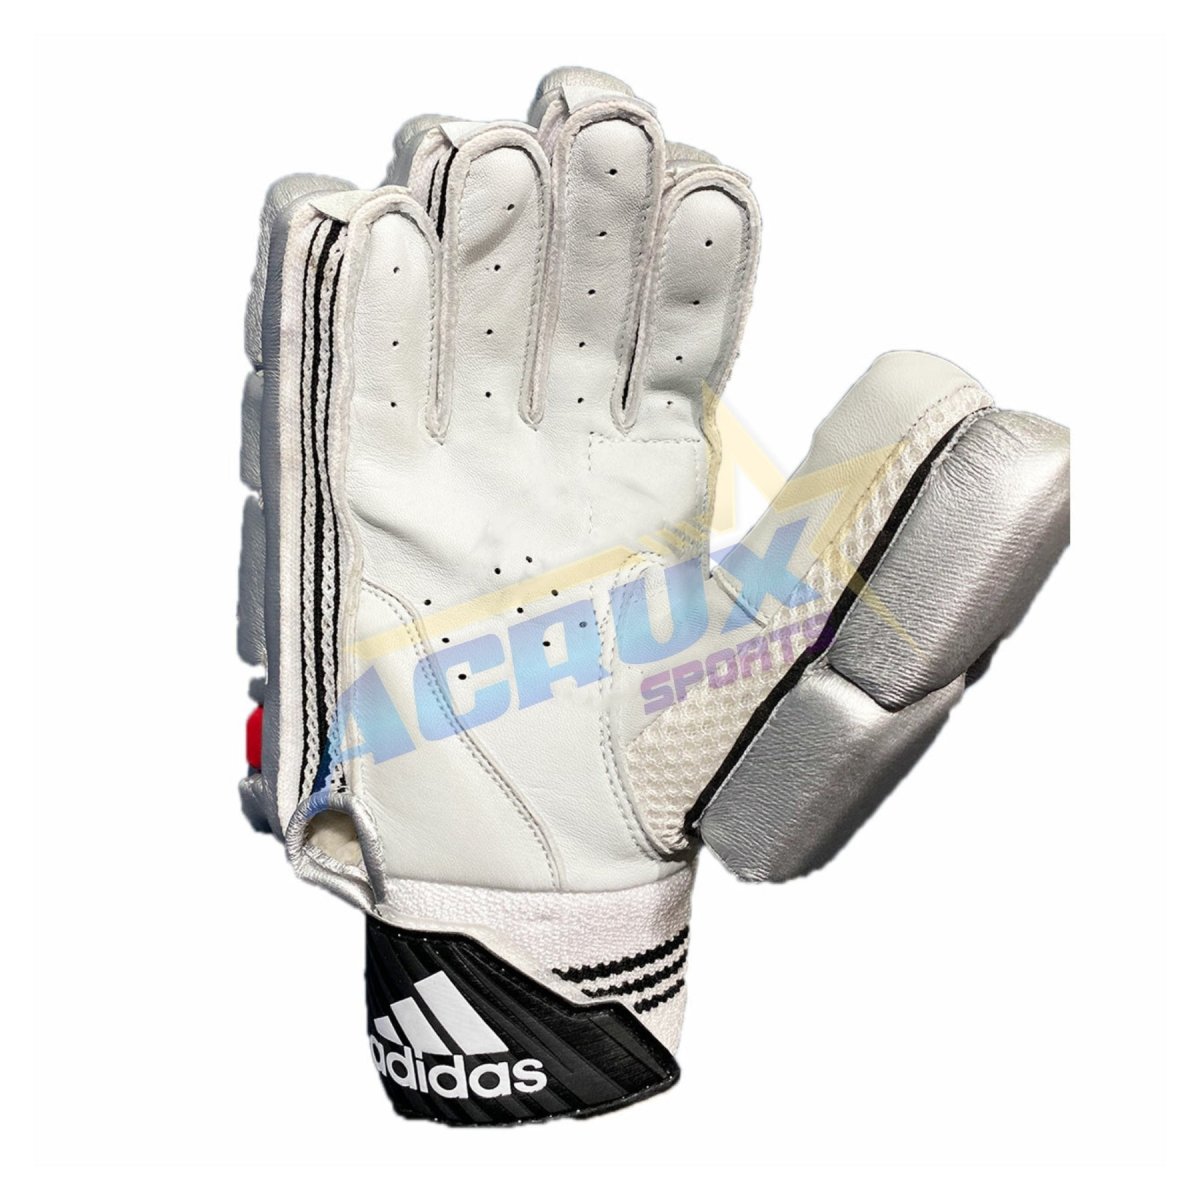 Adidas Incurza 1.0 Silver Cricket Batting Gloves